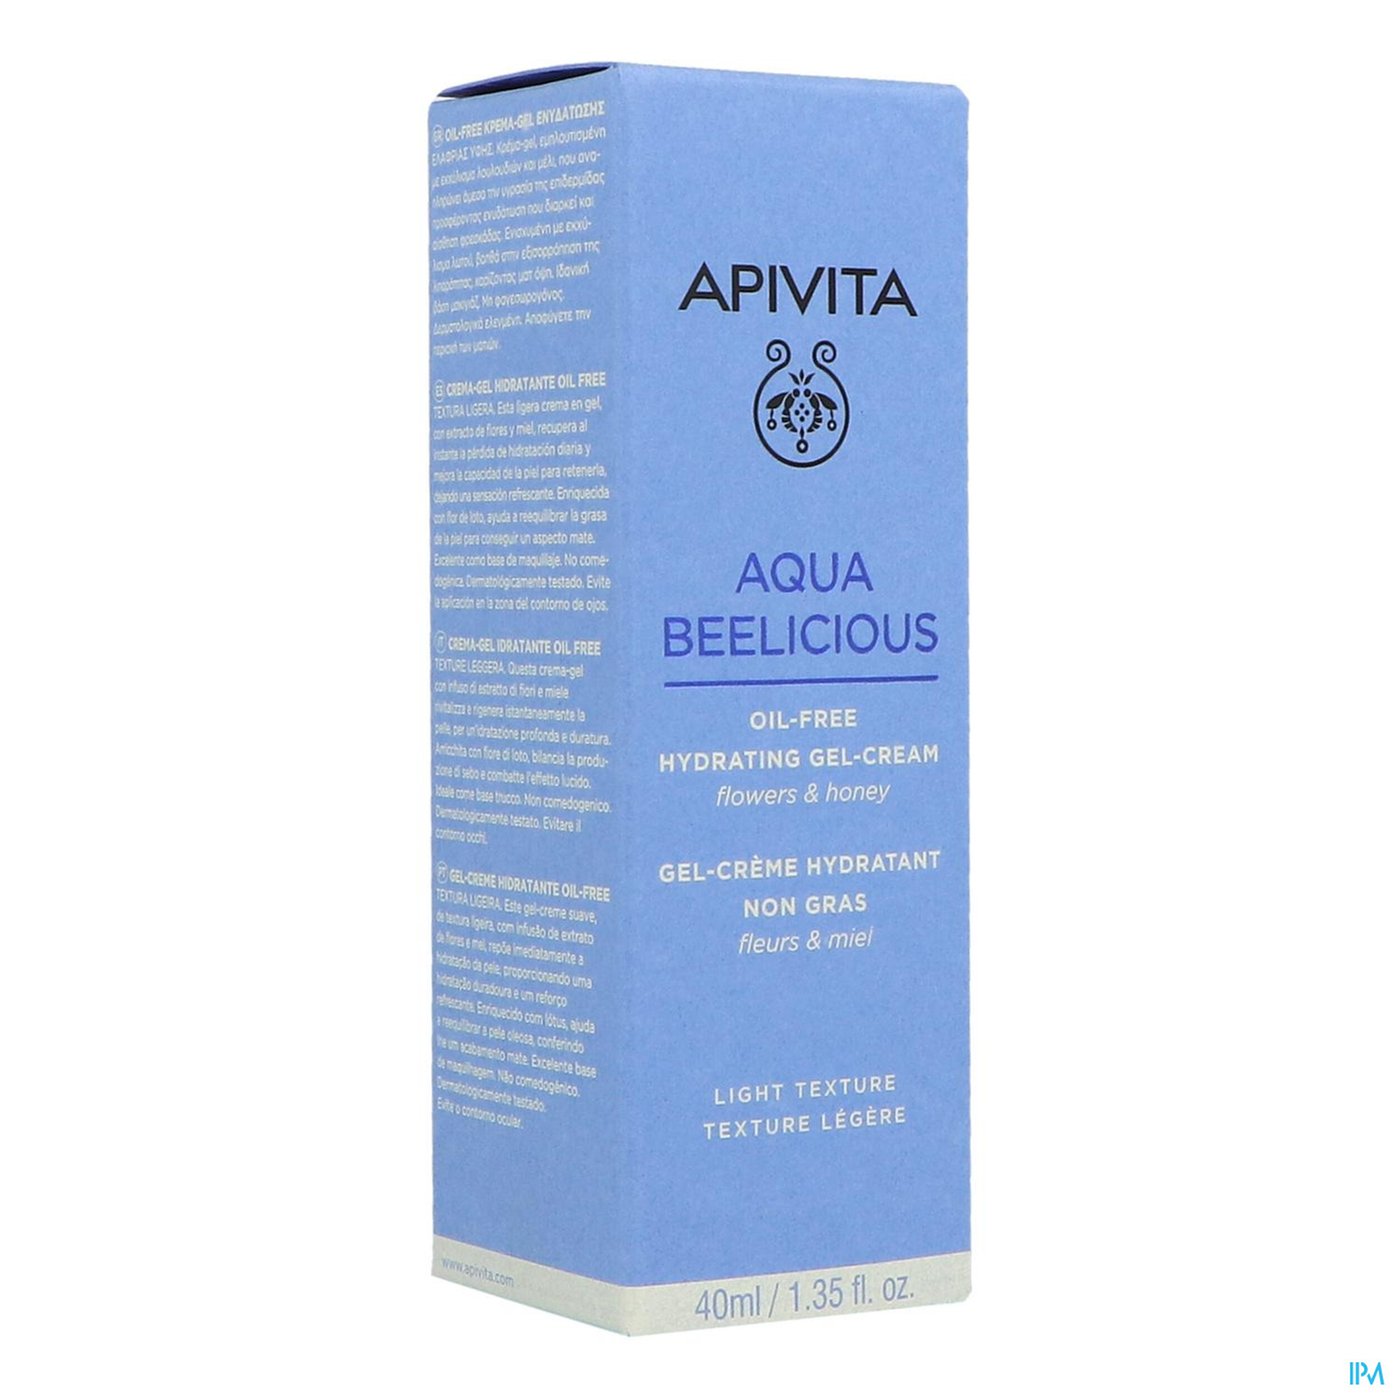 Apivita Aqua Beelicious Oil Free Hydra Gel Cr 40ml packshot